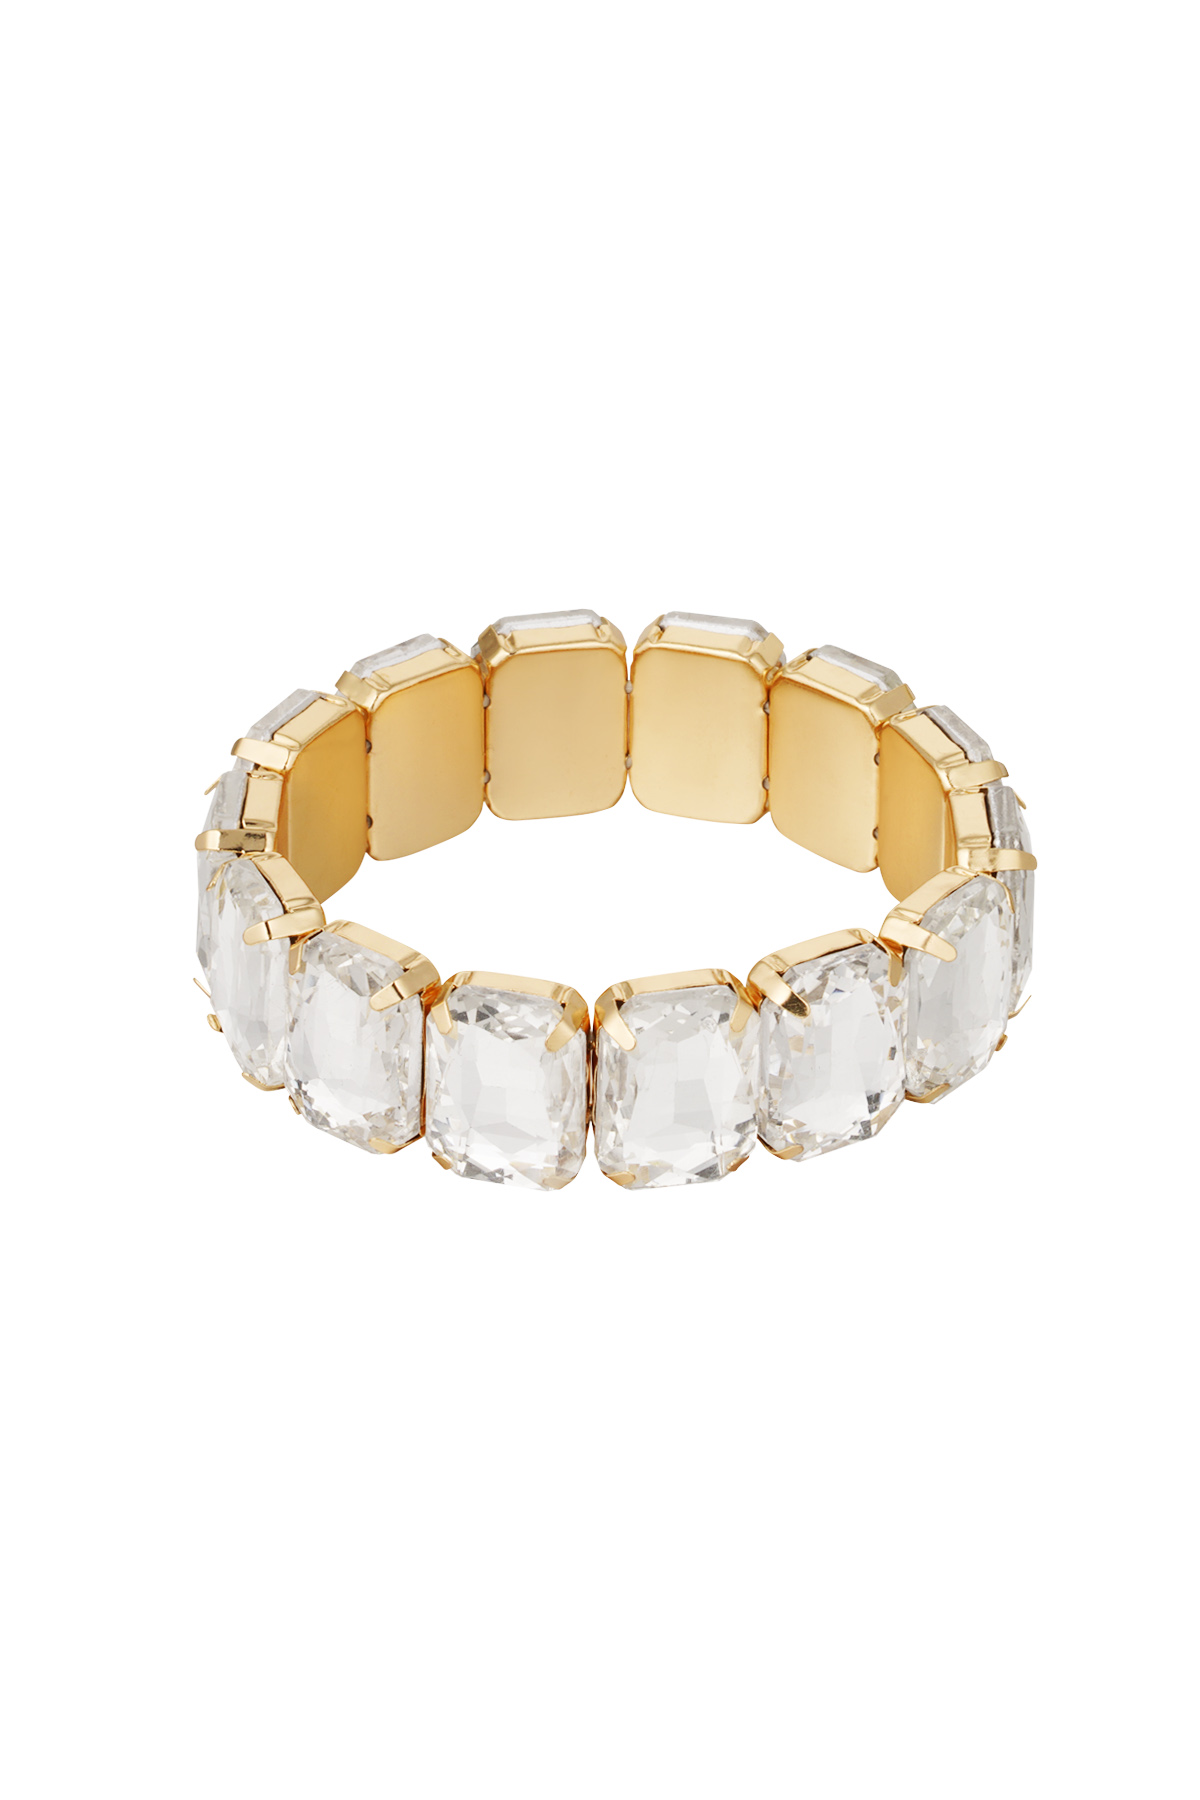 Slave bracelet large stones - gold/white h5 